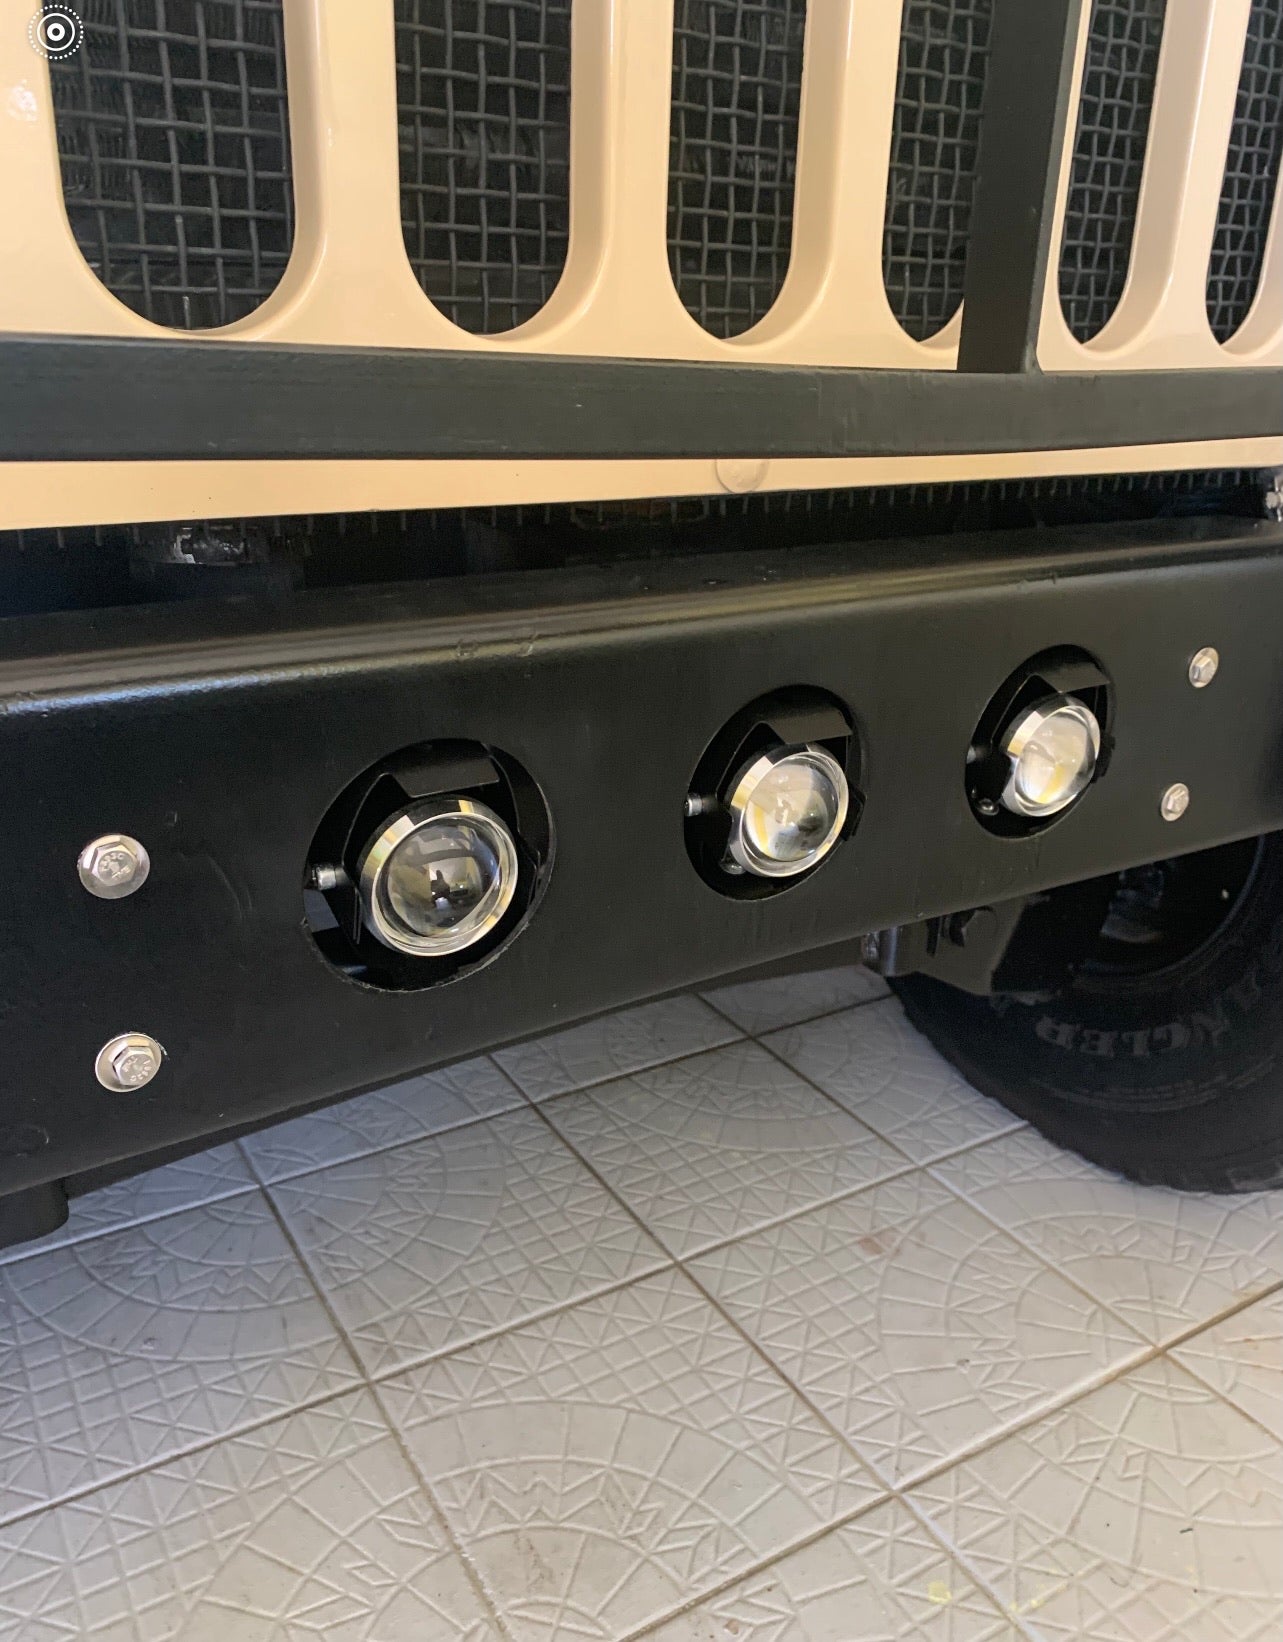 Humvee Light Bar 24V Blazer 100 watts - Blanc U5 Lumières - Pas de perceuse Installer M998 Military Blanc Triple Light Bar